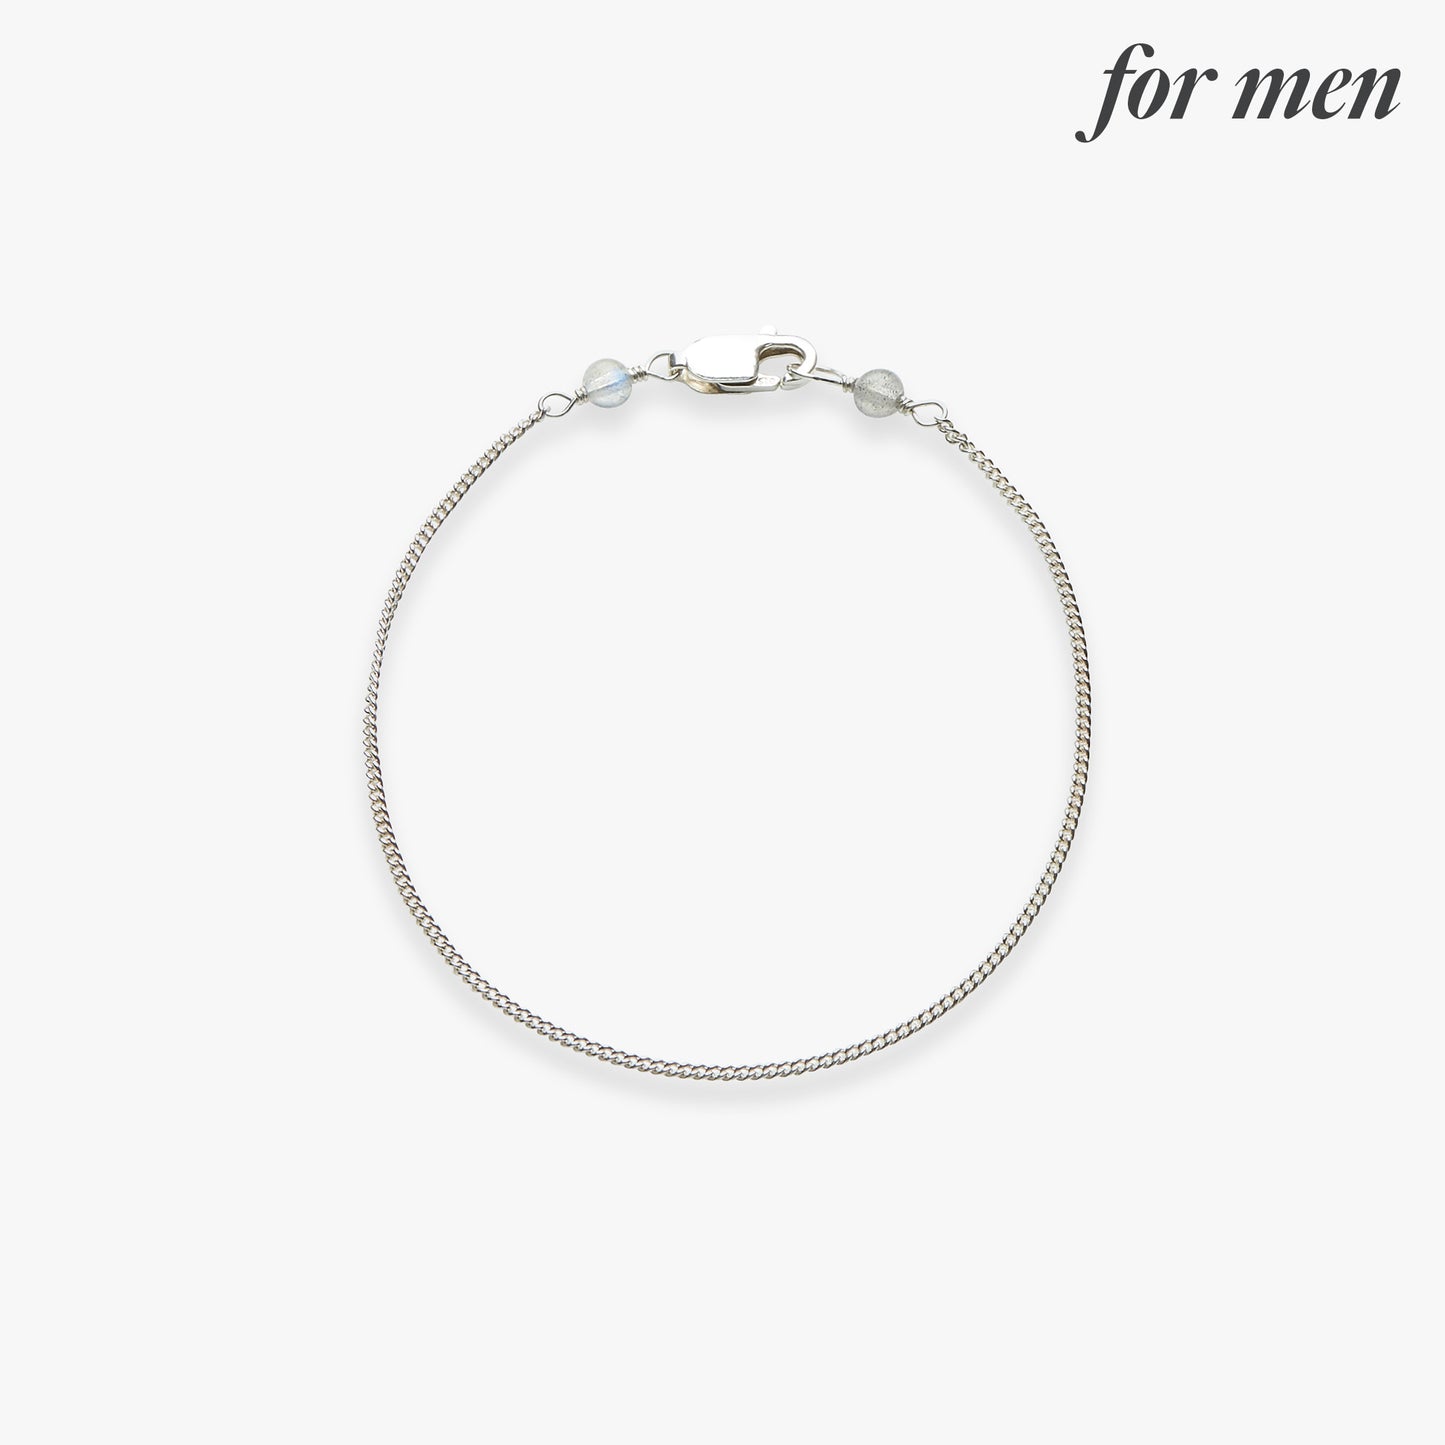 Curb chain bracelet silver for men